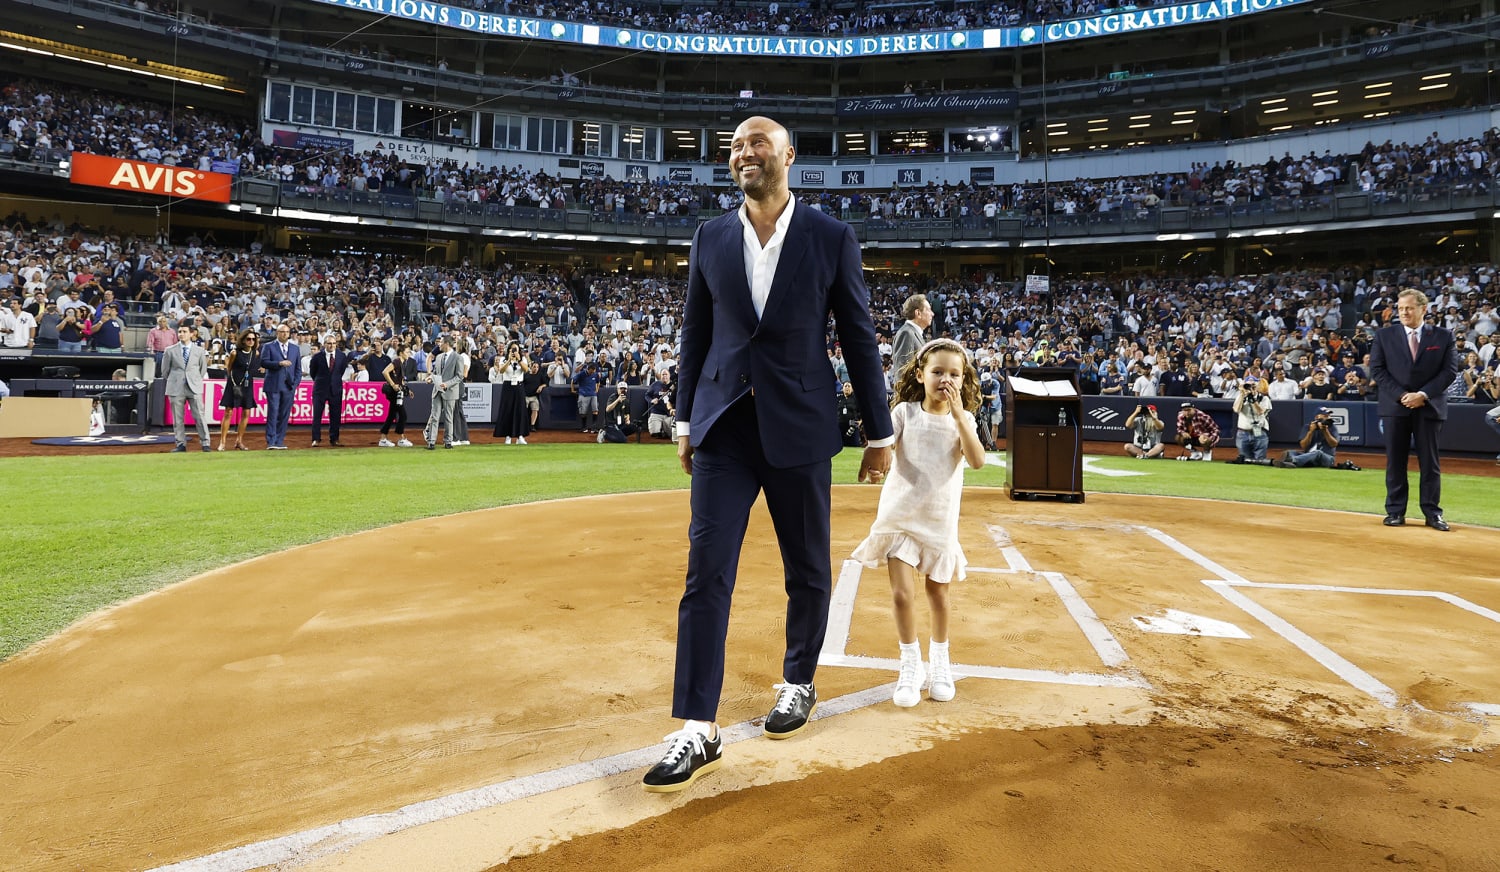 Derek Jeter to be honored at Yankee Stadium on Sept. 9